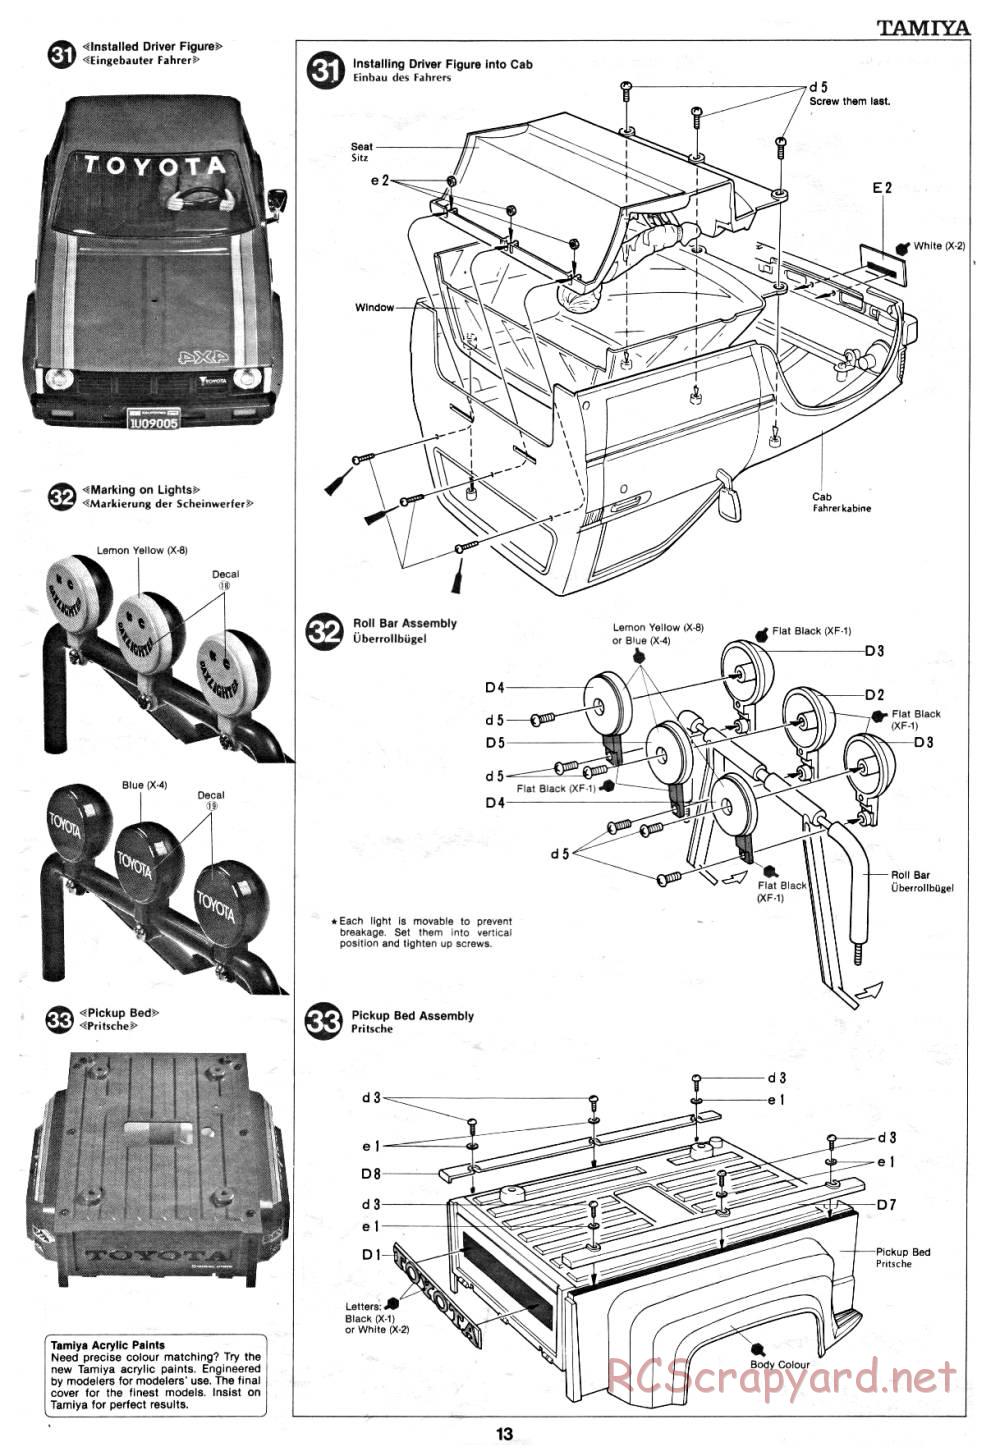 Tamiya - Toyota 4x4 Pick-Up - 58028 - Manual - Page 13